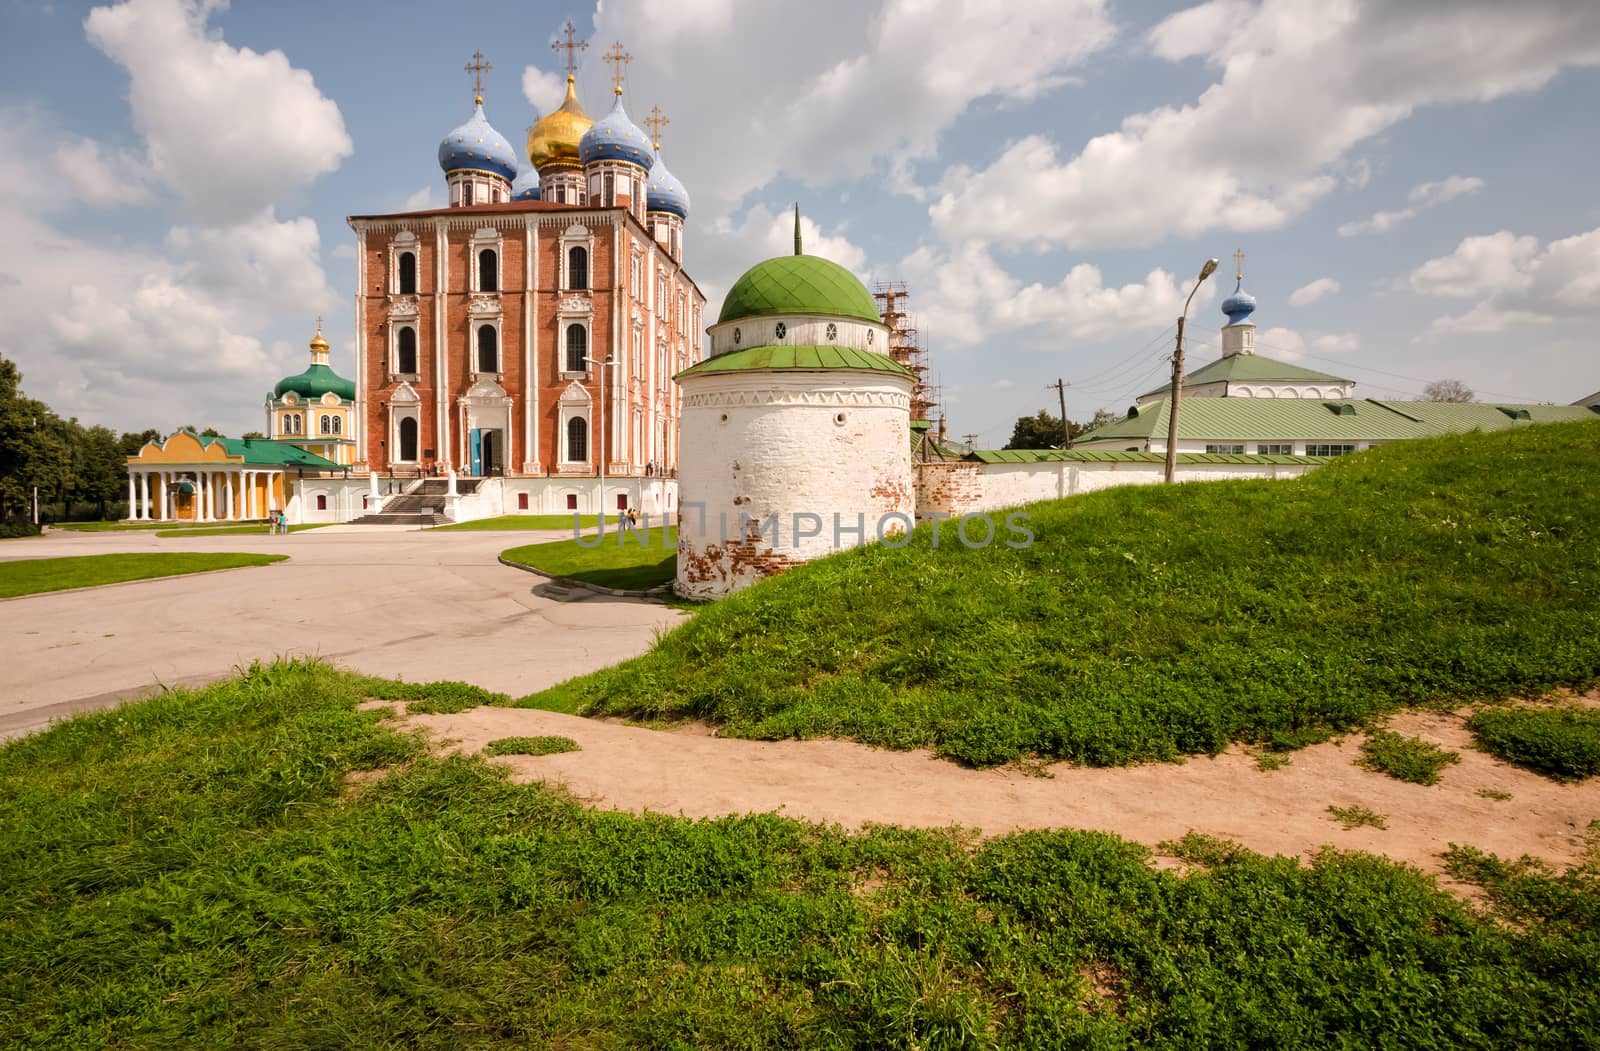 Old churches in the Kremlin in Ryazan, Russia